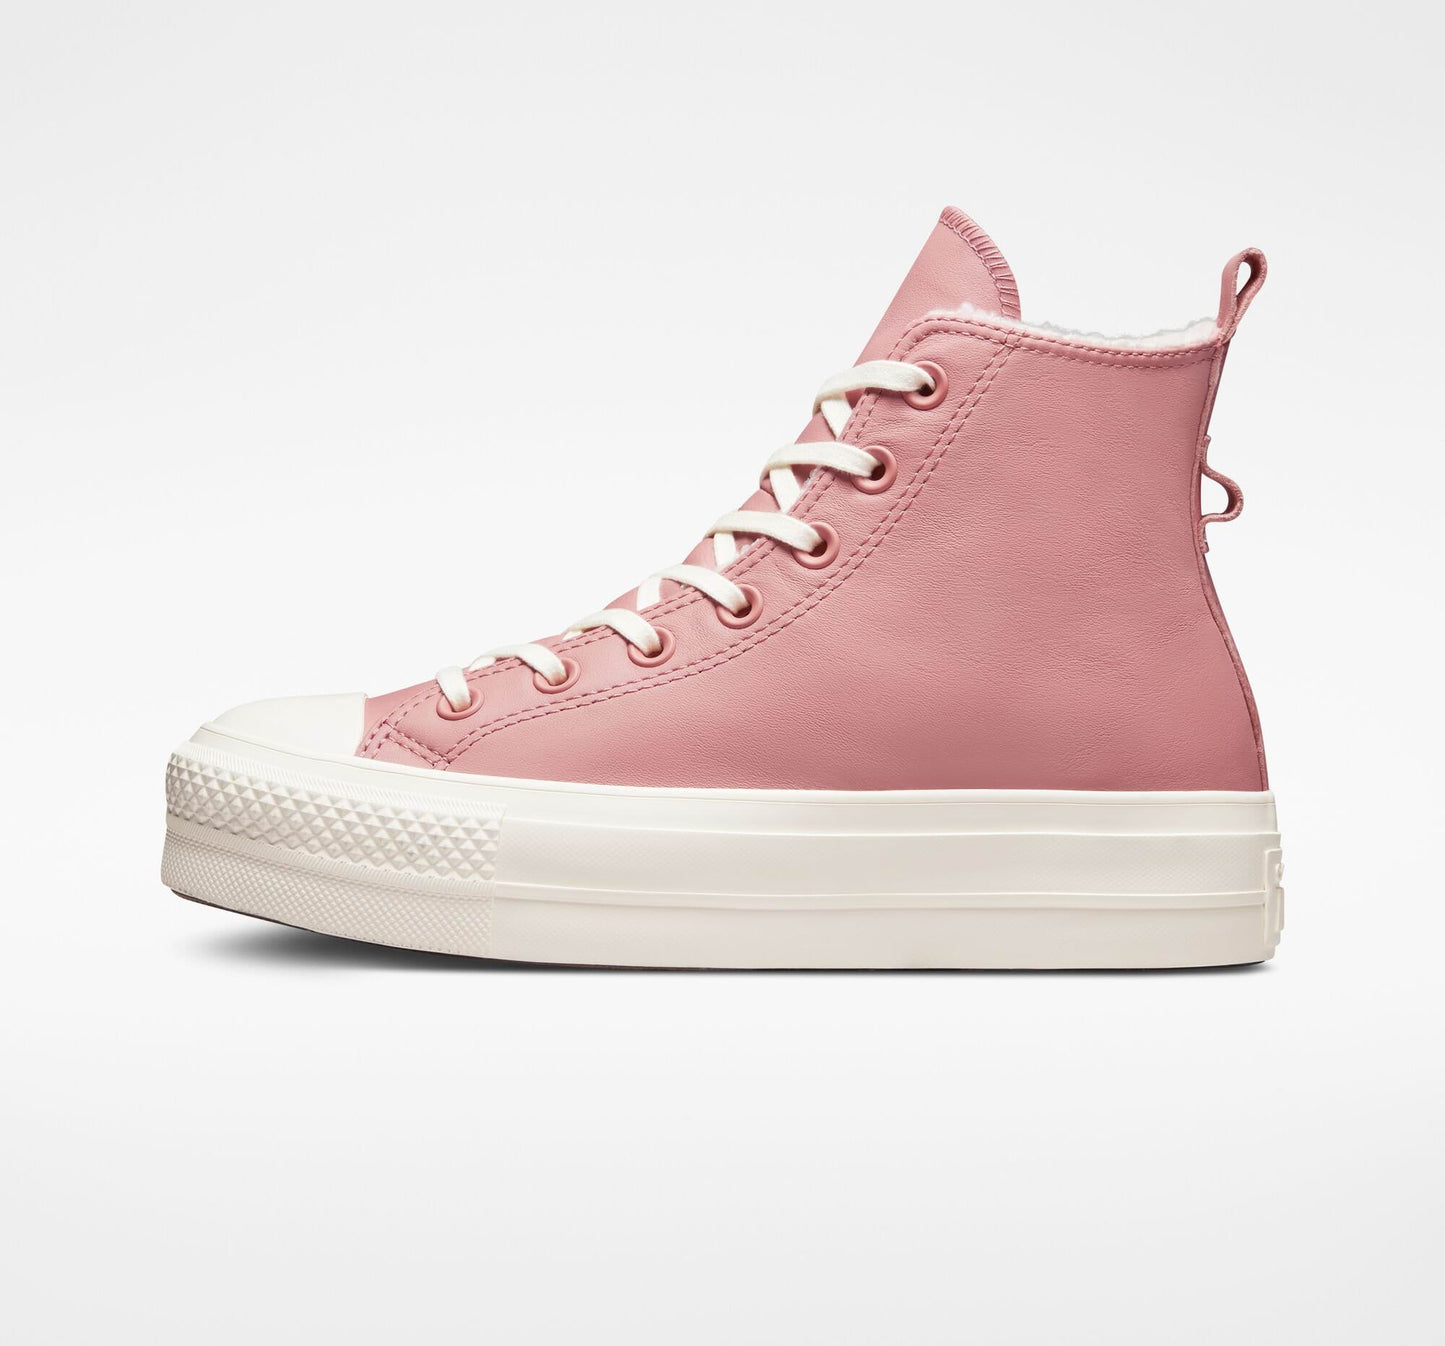 Women's Converse Chuck Taylor All Star Lined Leather Platform Hi Top Shoe, A04256C Multi Sizes Rust Pink/Egret/Egret